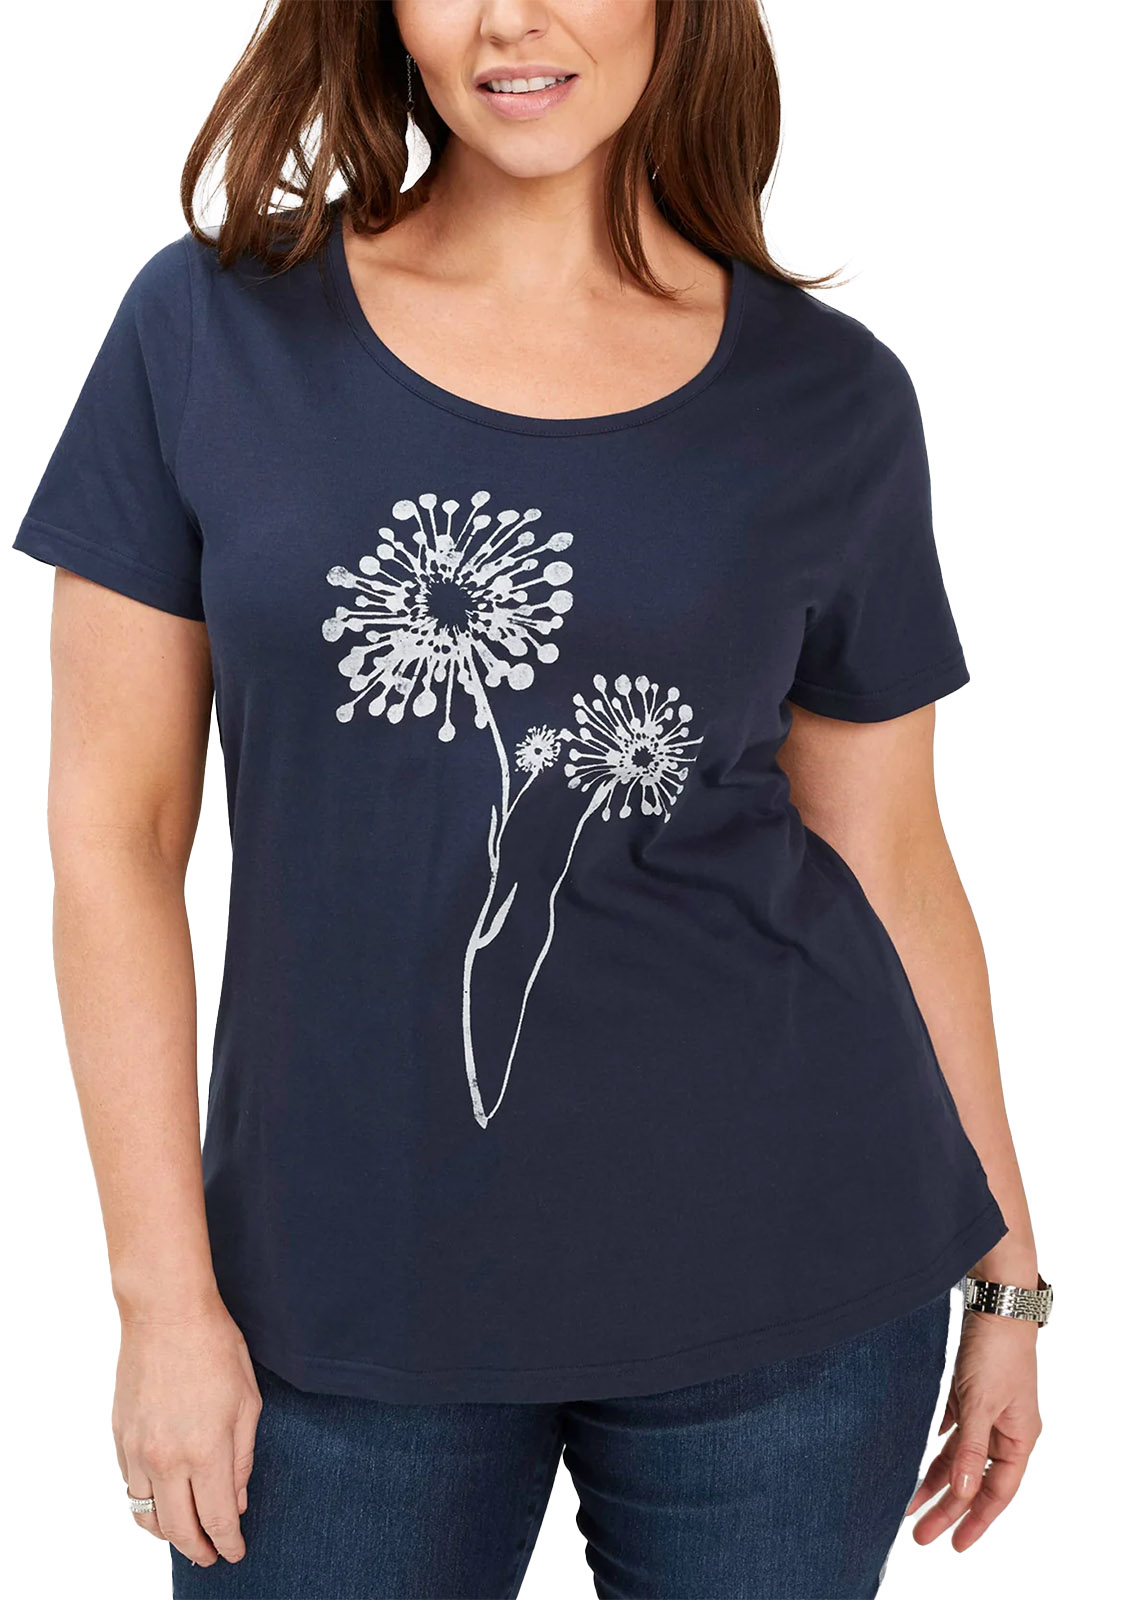 NAVY Cotton Blend Dandelion Print T-Shirt - Size 10/12 to 30/32 (S to 3XL)